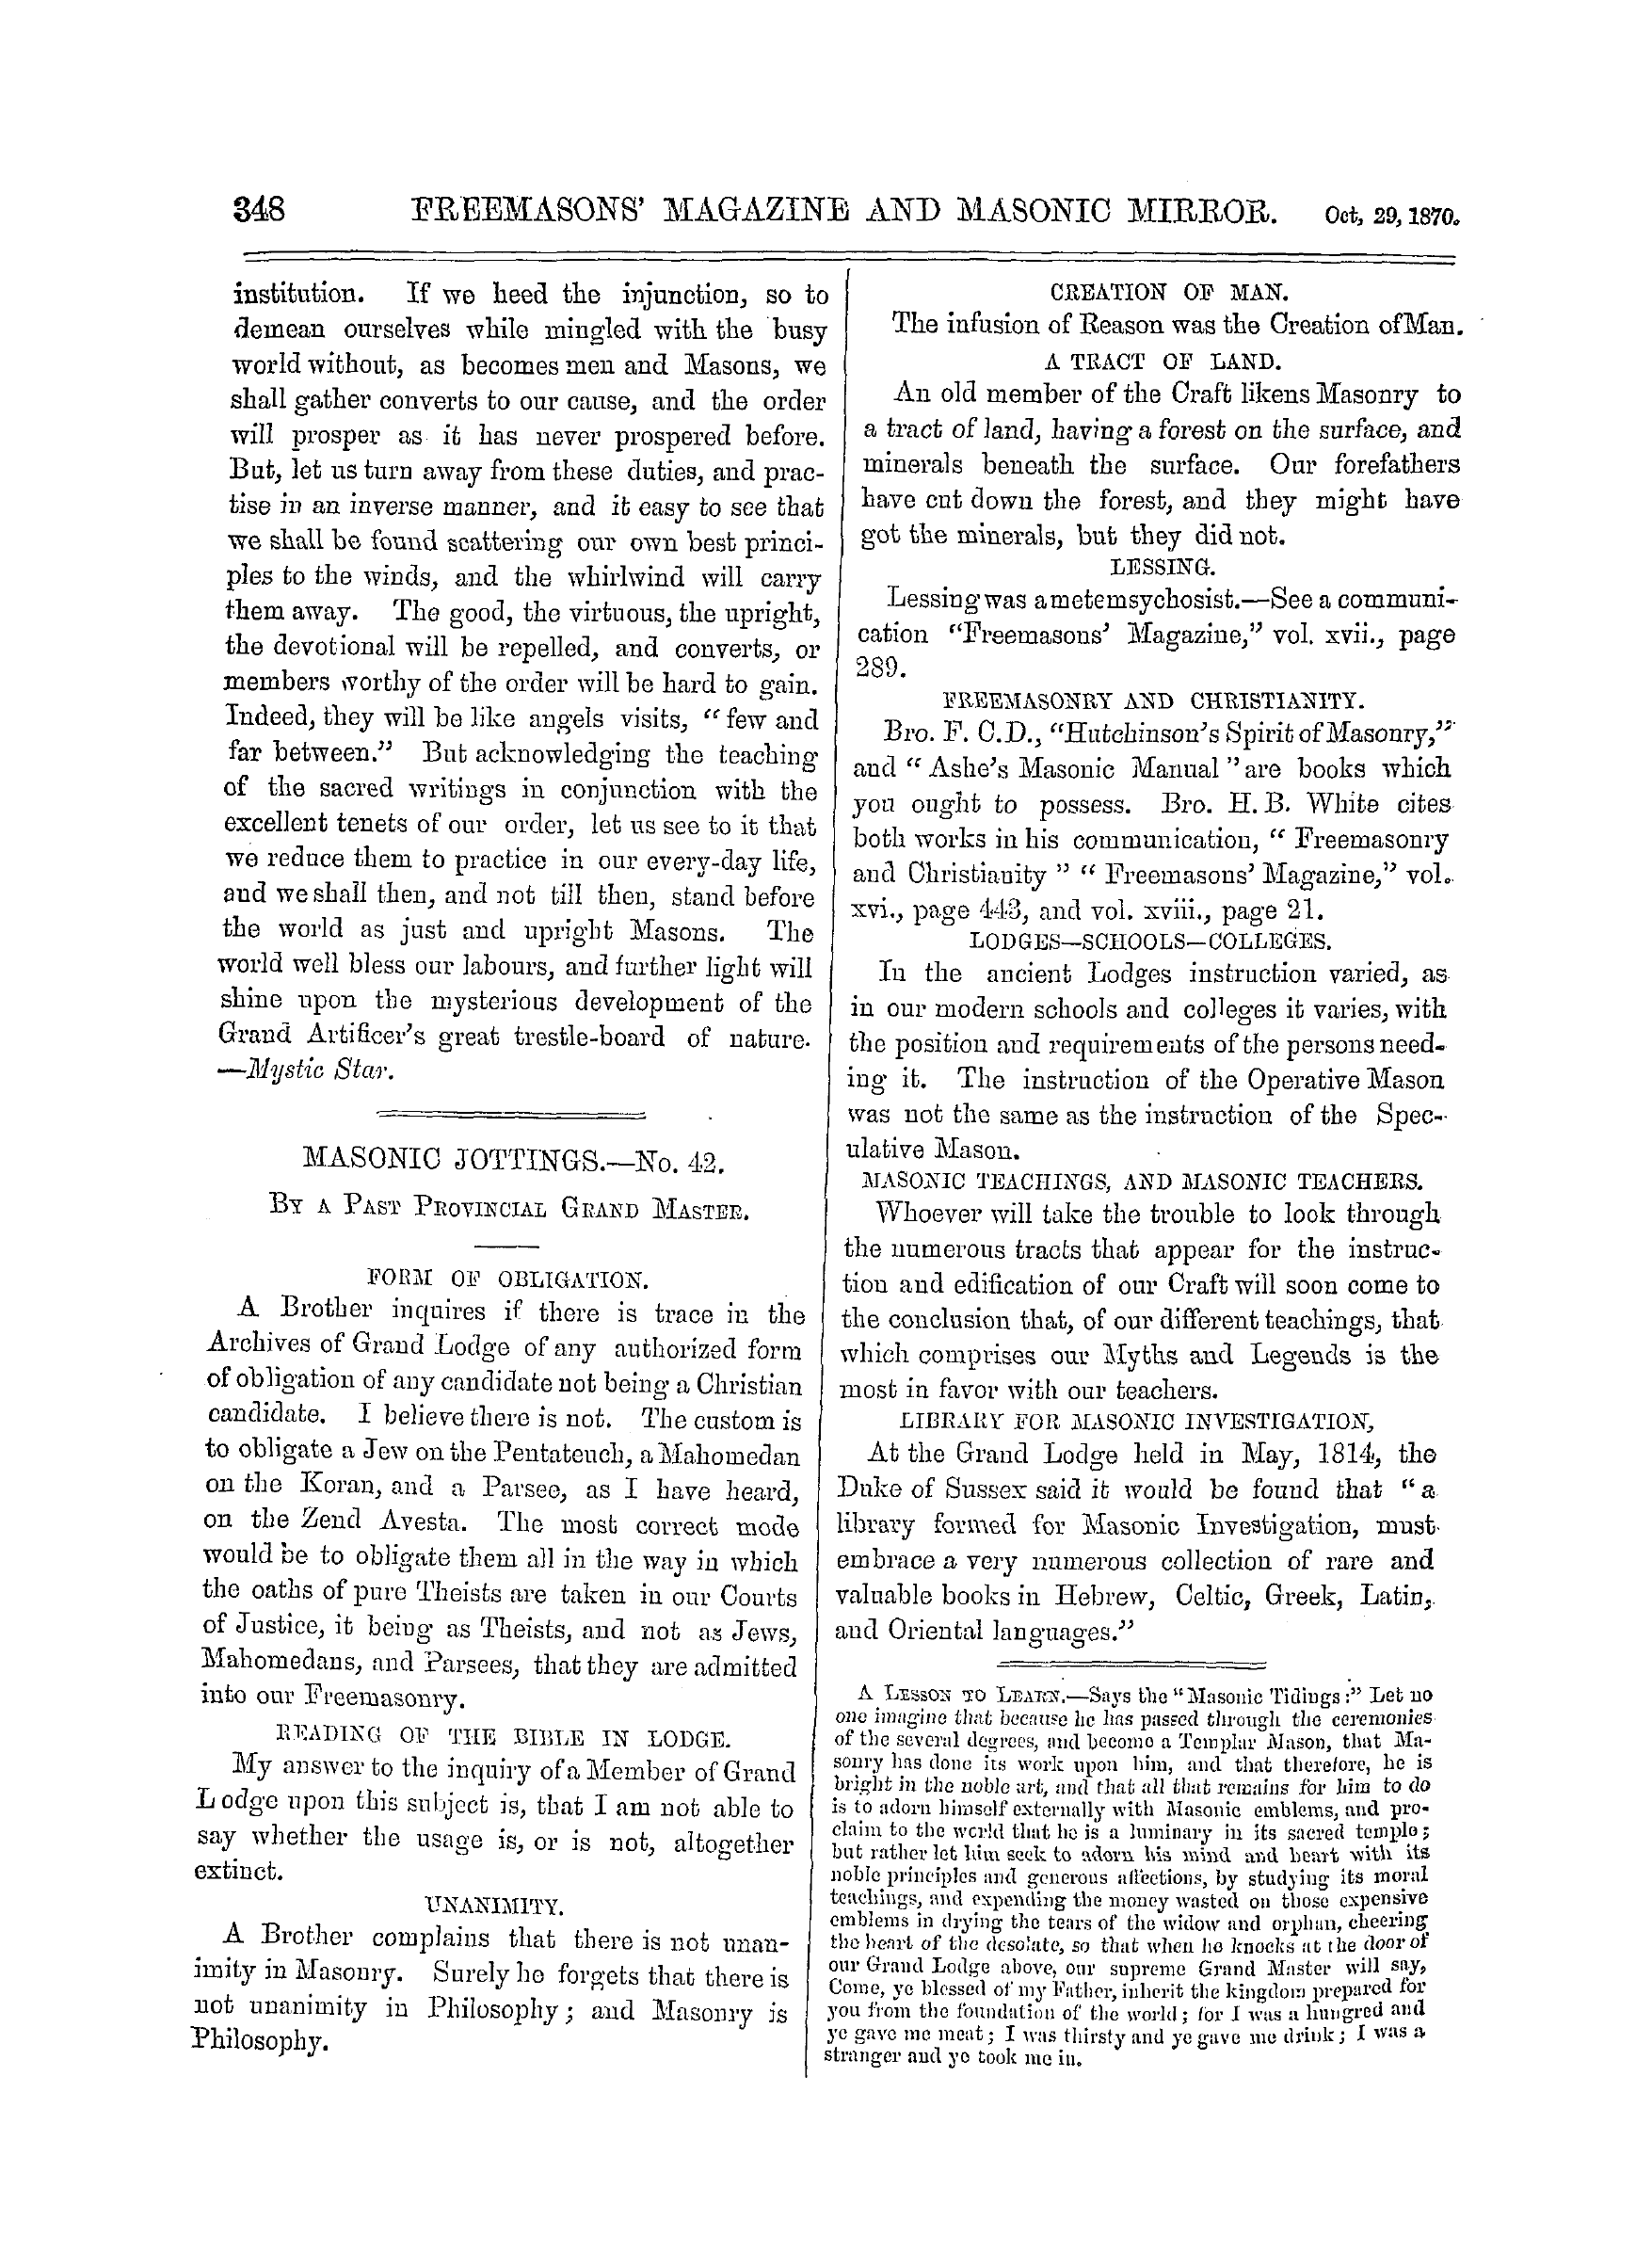 The Freemasons' Monthly Magazine: 1870-10-29 - The Bible And Masonry.